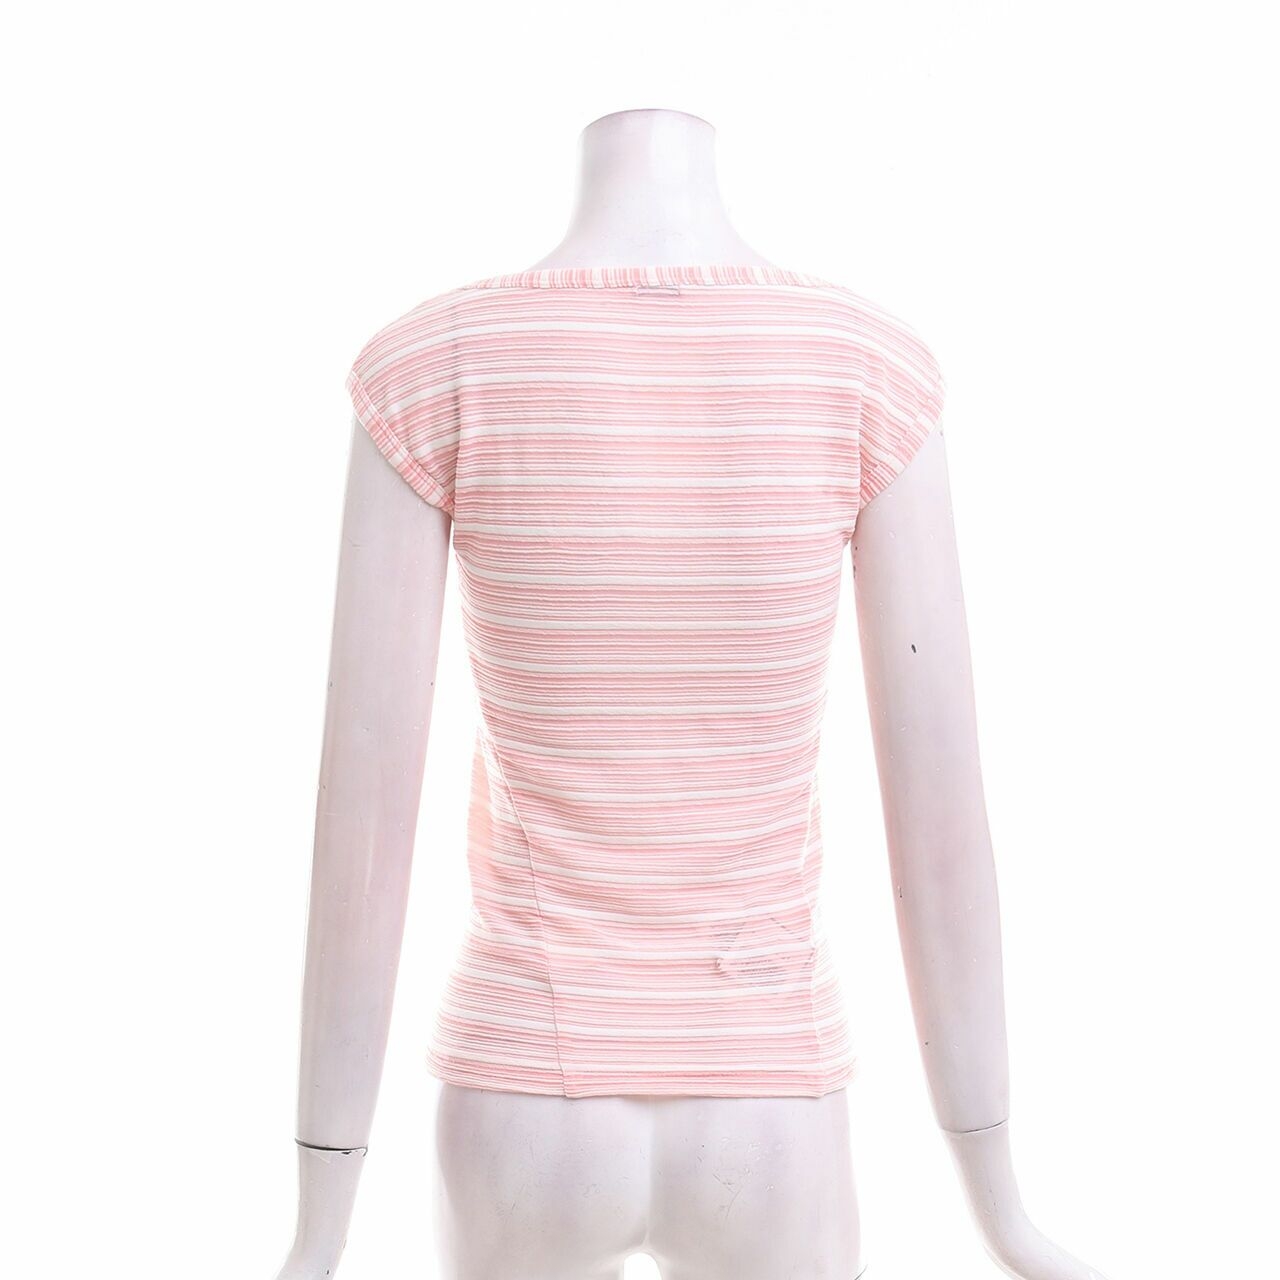 Mphosis Pink T-shirt